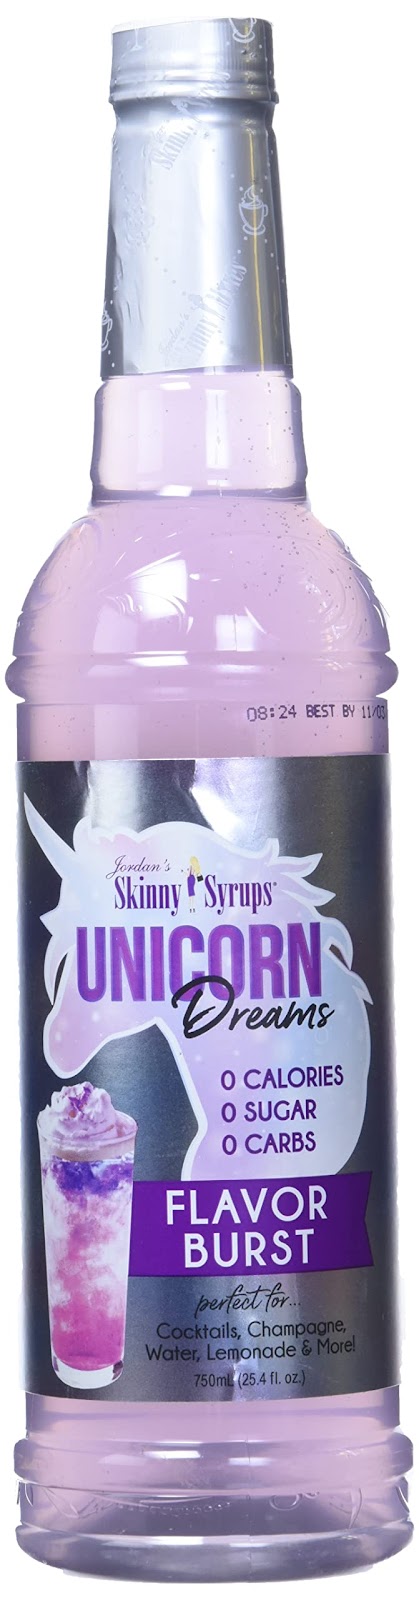 Jordan's Skinny Syrups Sugar Free Unicorn Syrup